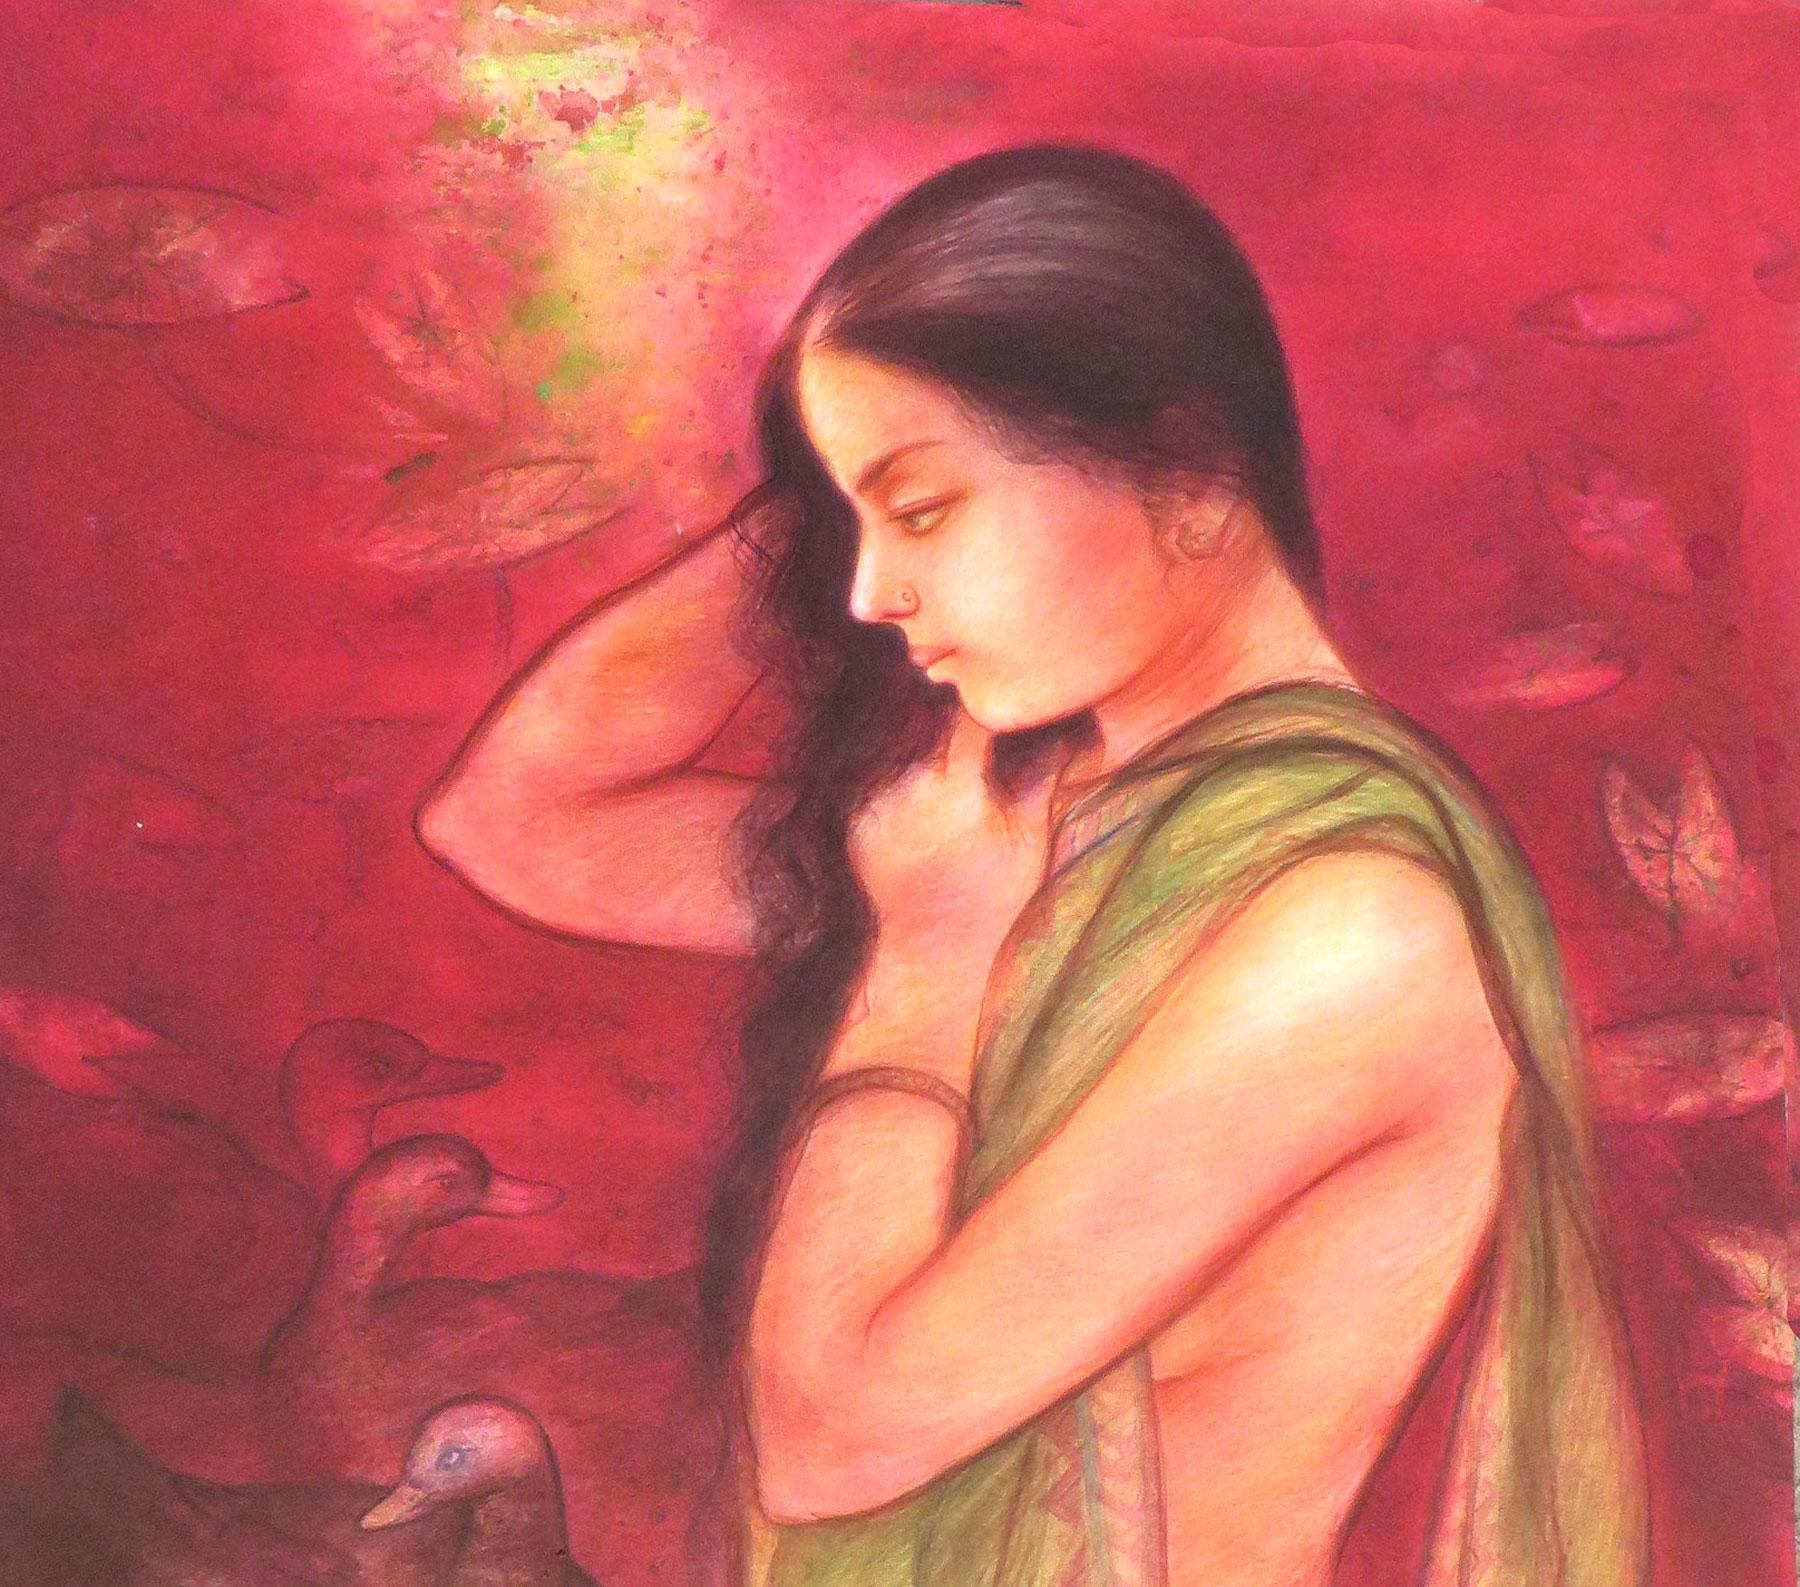 Lotus Pond, Bathing Bengali Women, Mixed Media, Watercolor, Red, Green